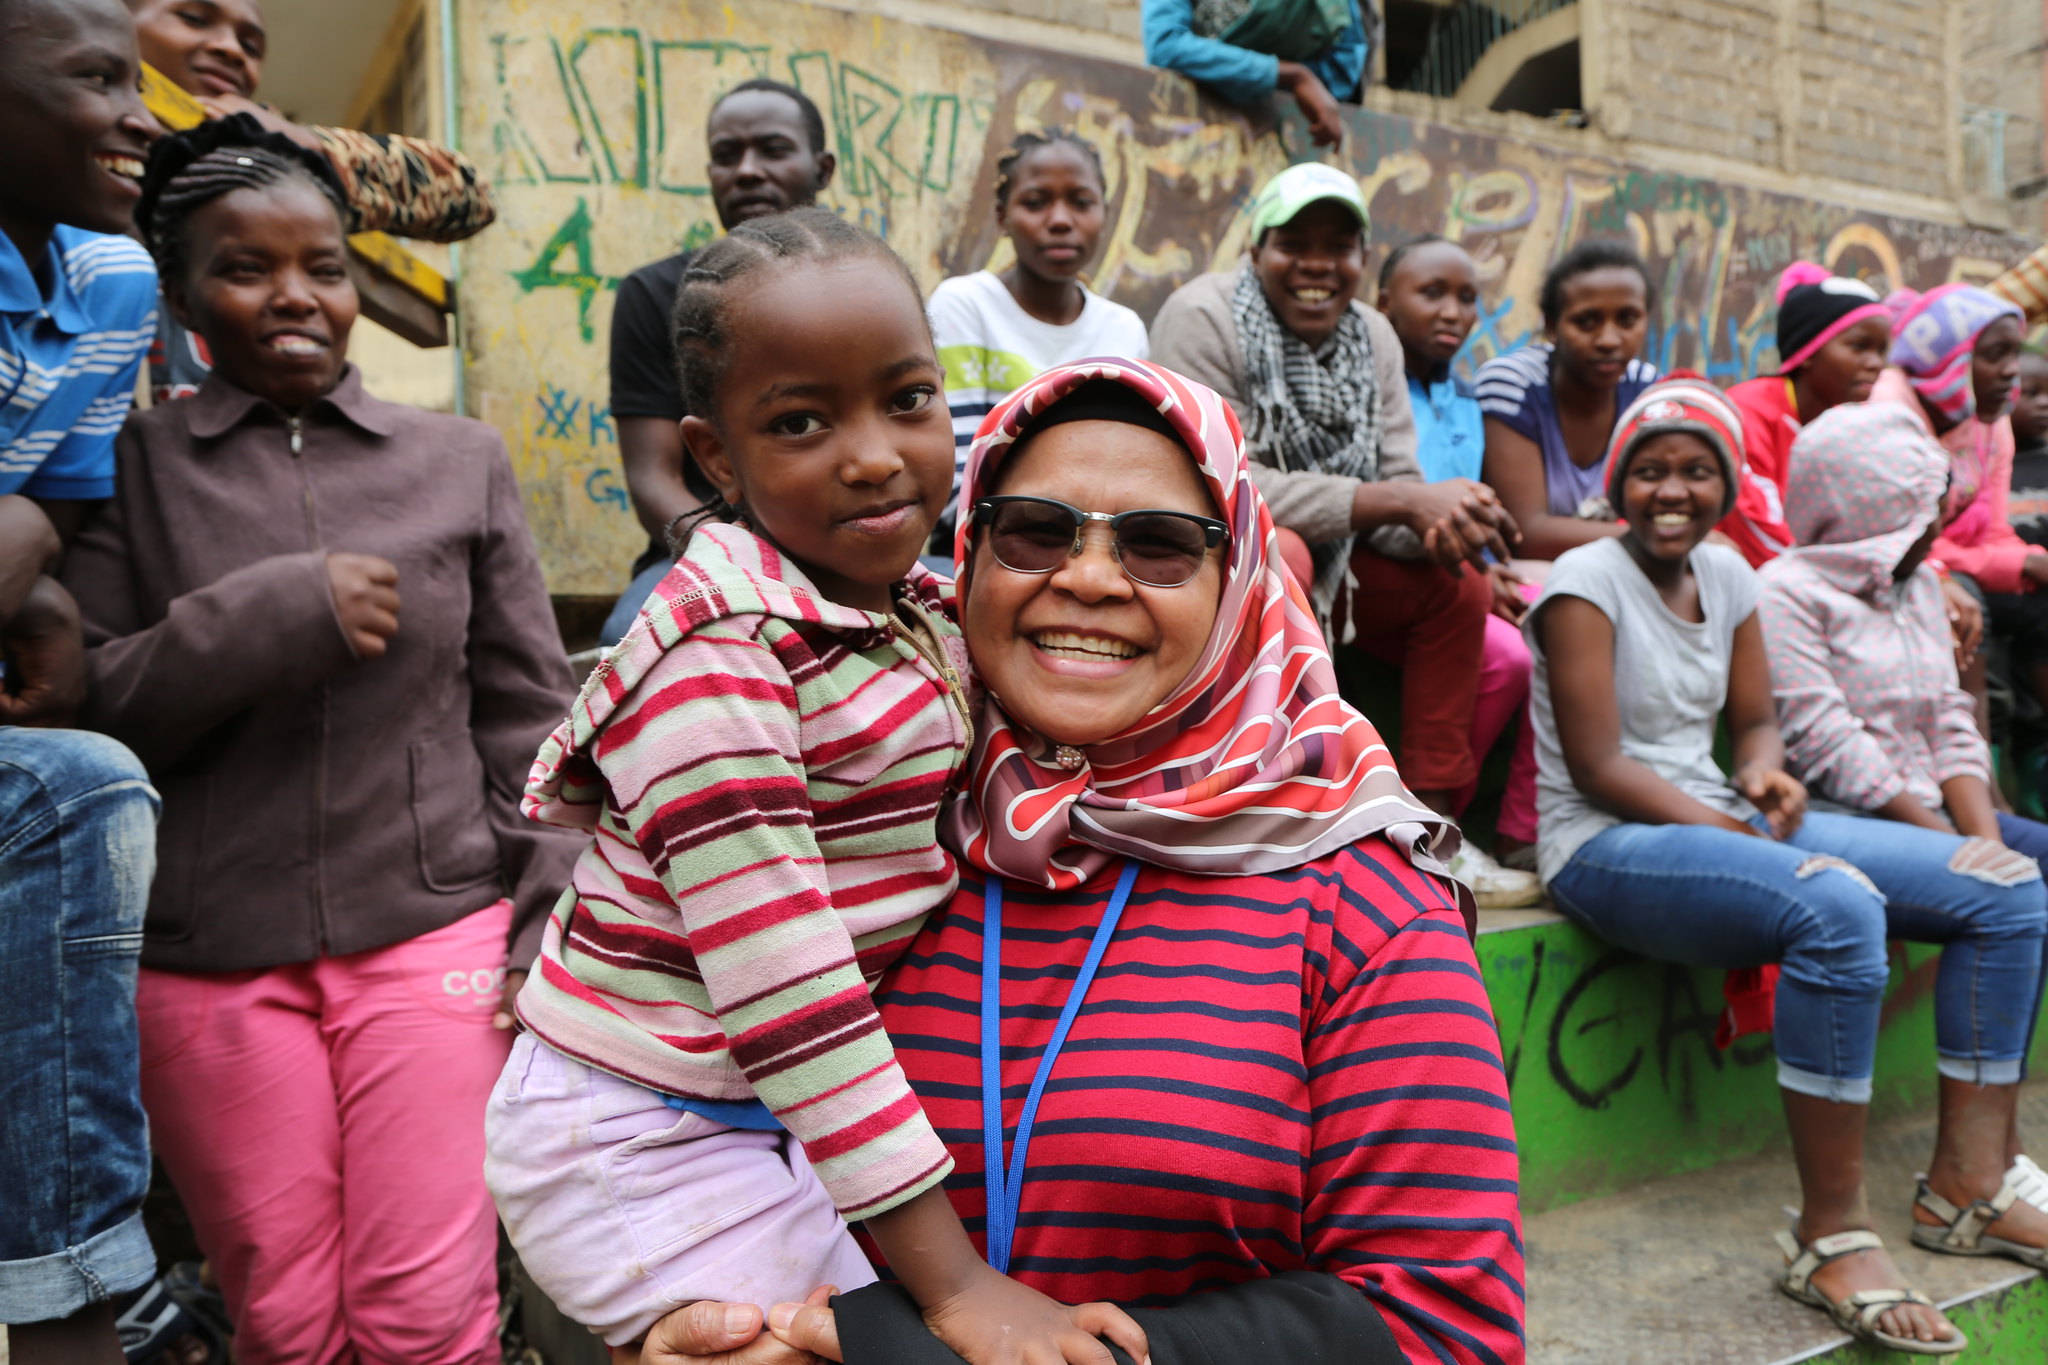 UN-Habitat Executive Director Ms. Maimunah Mohd Sarif on a meet the people tour of Mathare in Nairobi, Kenya 2018 ©UN-Habitat, Julius Mwelu